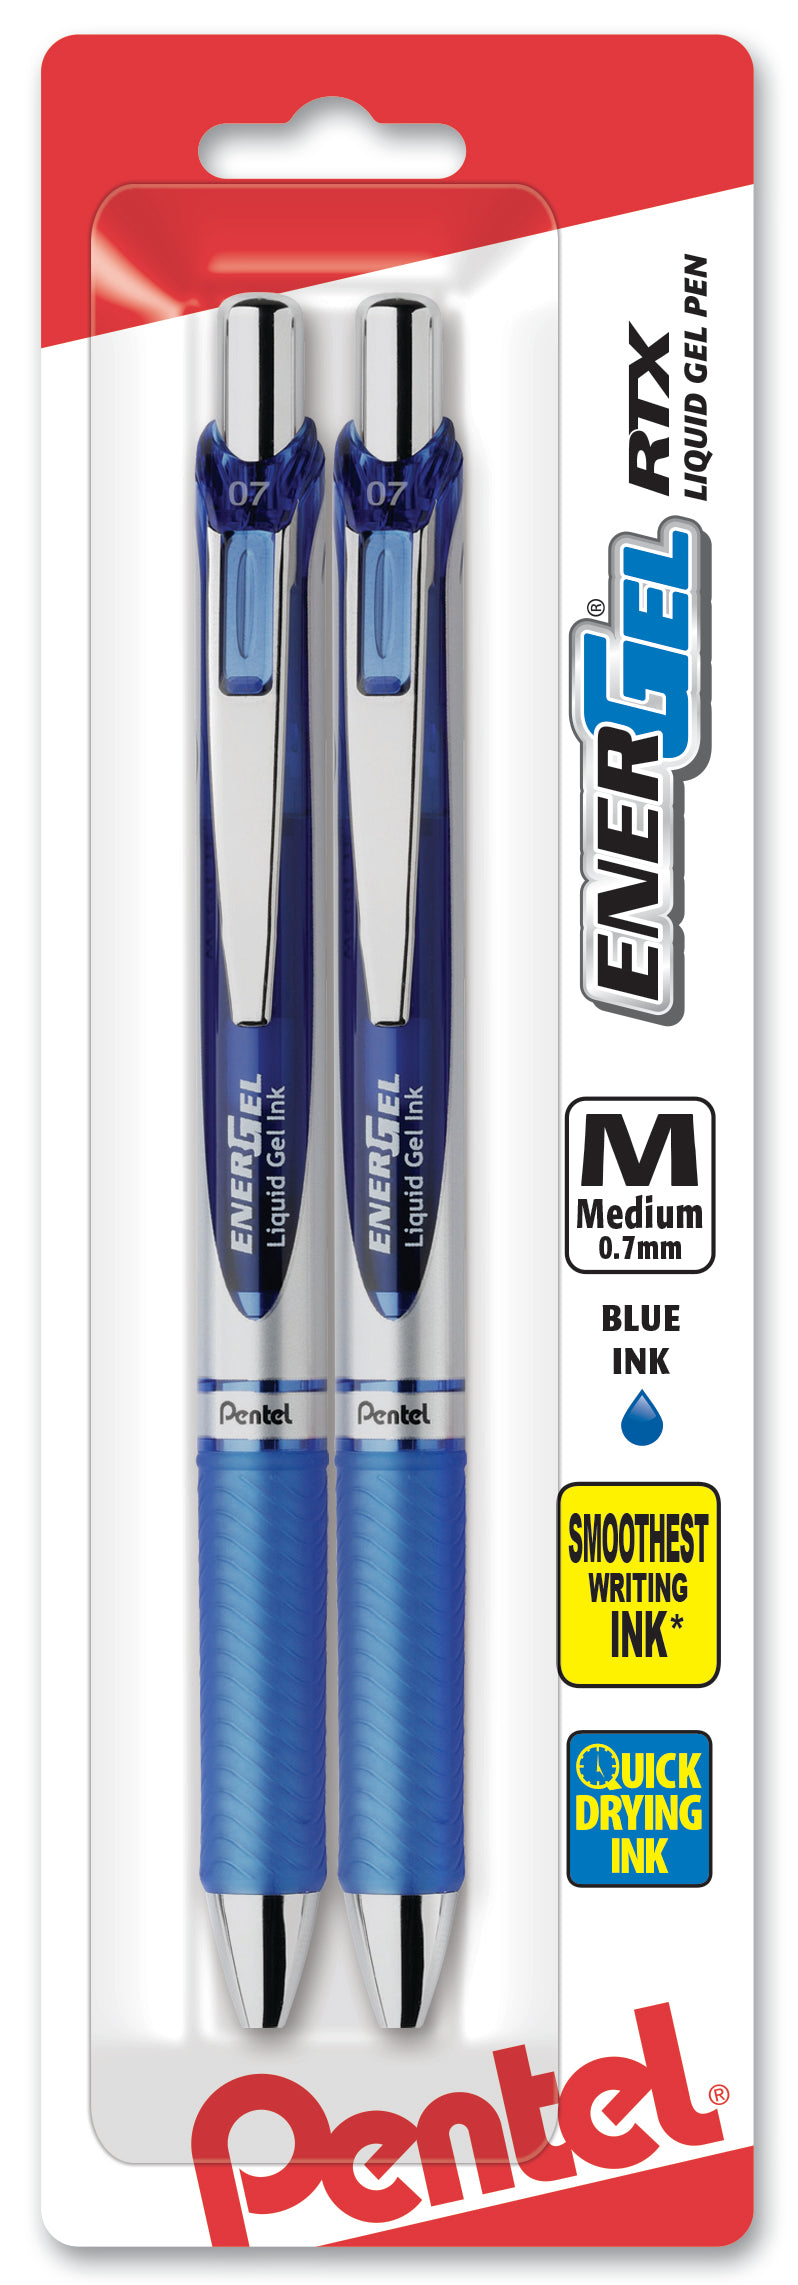 Pentel EnerGel Liquid Gel Ink Pens 0.7 mm - Pack of 5 Black Deluxe RTX Pens  with 3 Refills